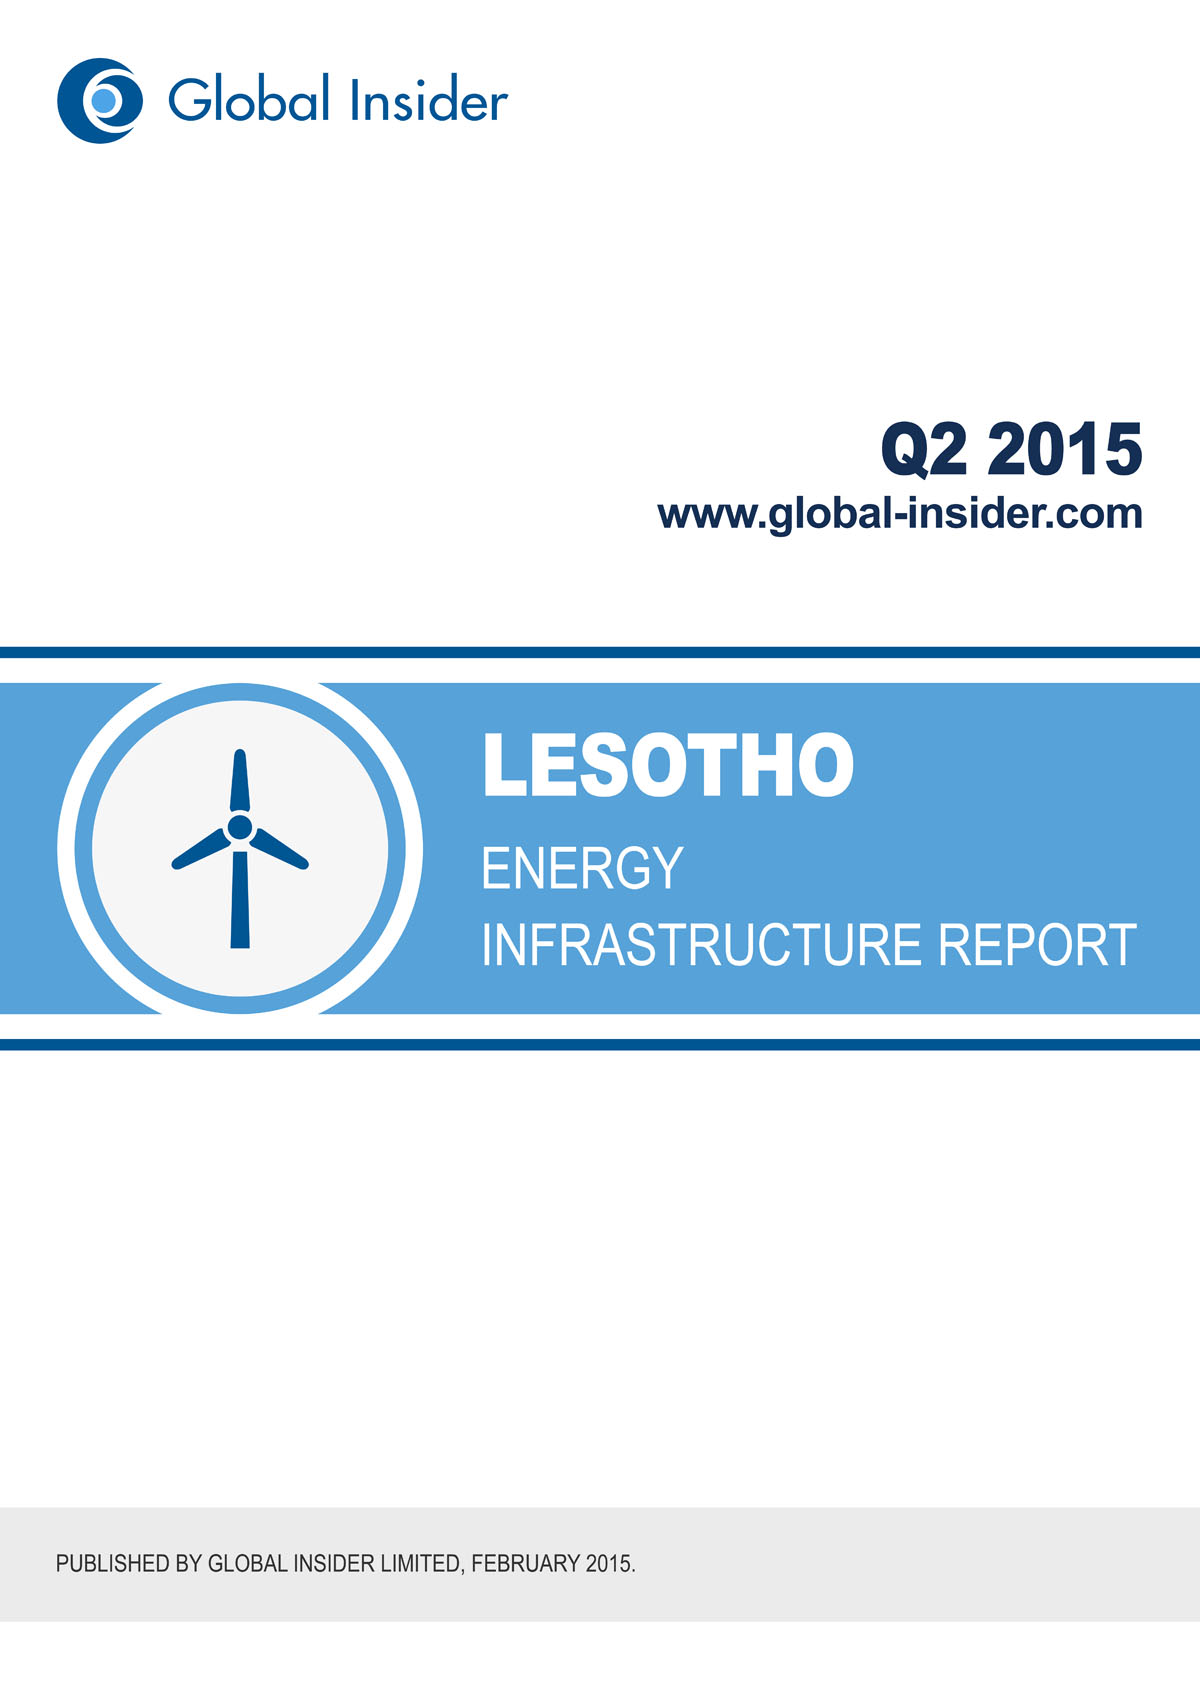 Lesotho Energy Infrastructure Report